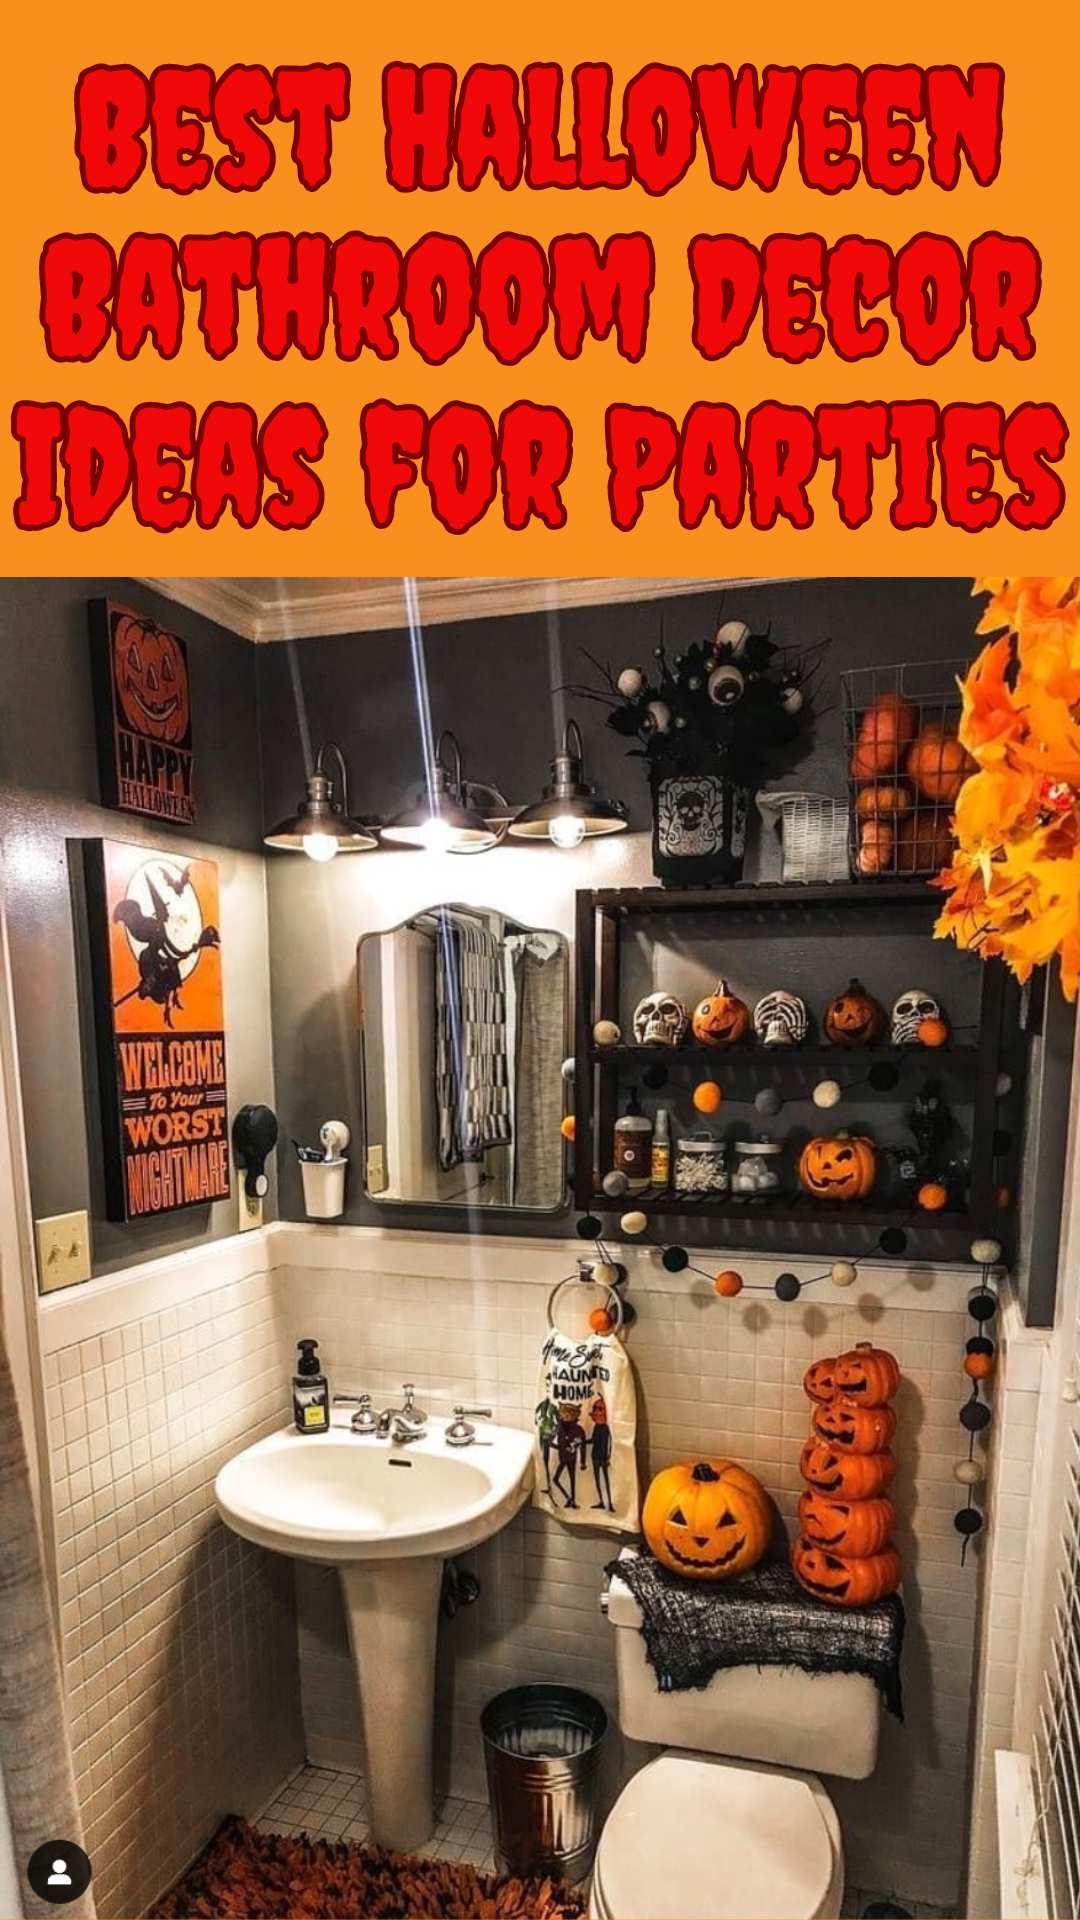 Best Halloween Bathroom Decor Ideas for Parties